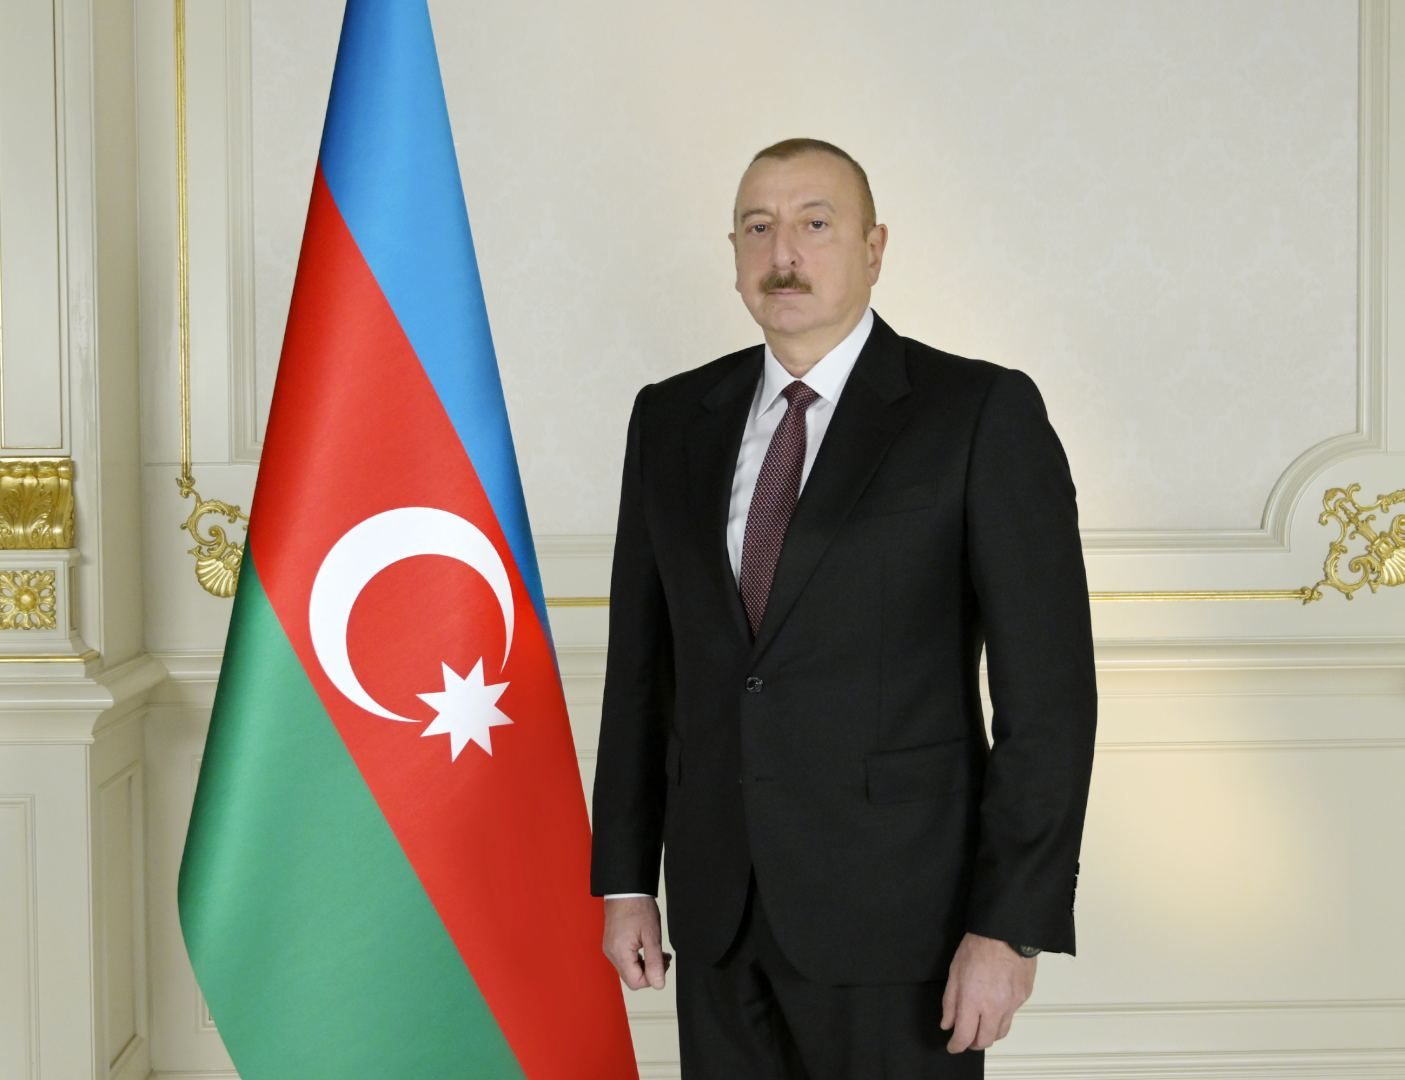 President Ilham Aliyev ends his working visit to Saint Petersburg